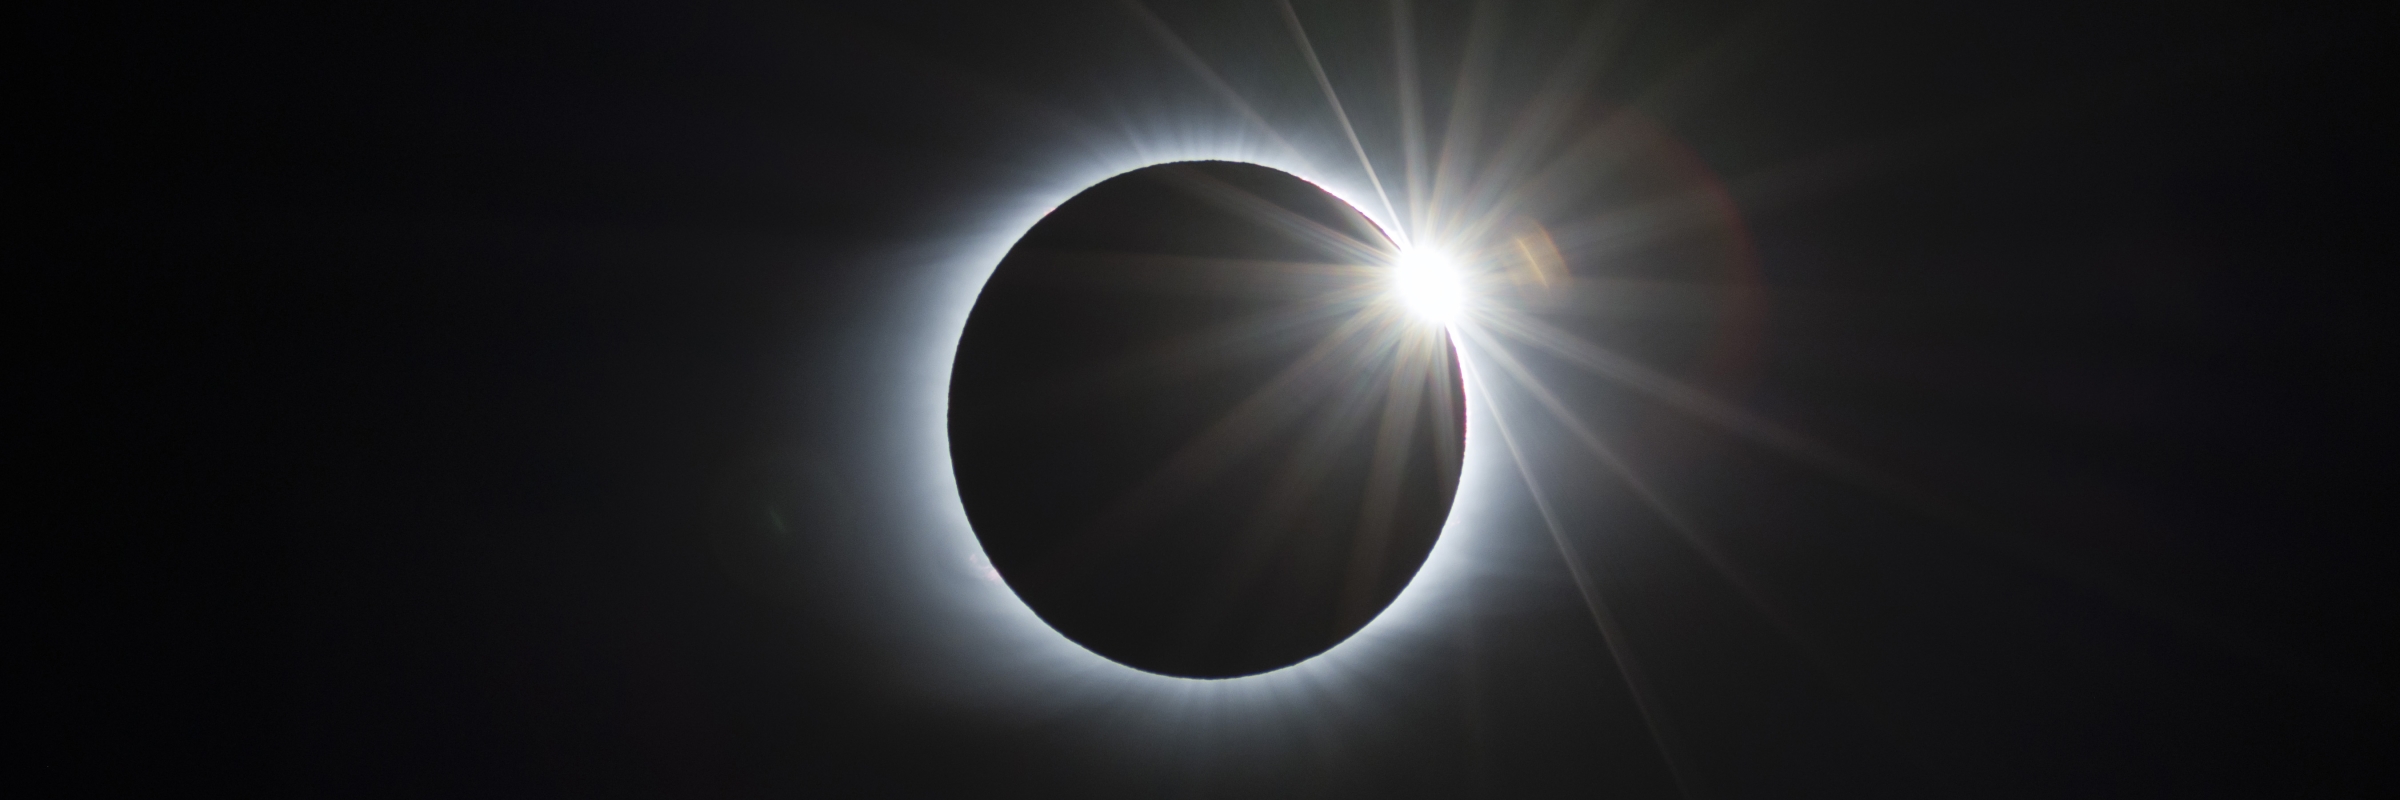 Total solar eclipse. Photo: ©2019 Fred Espenak, MrEclipse.com